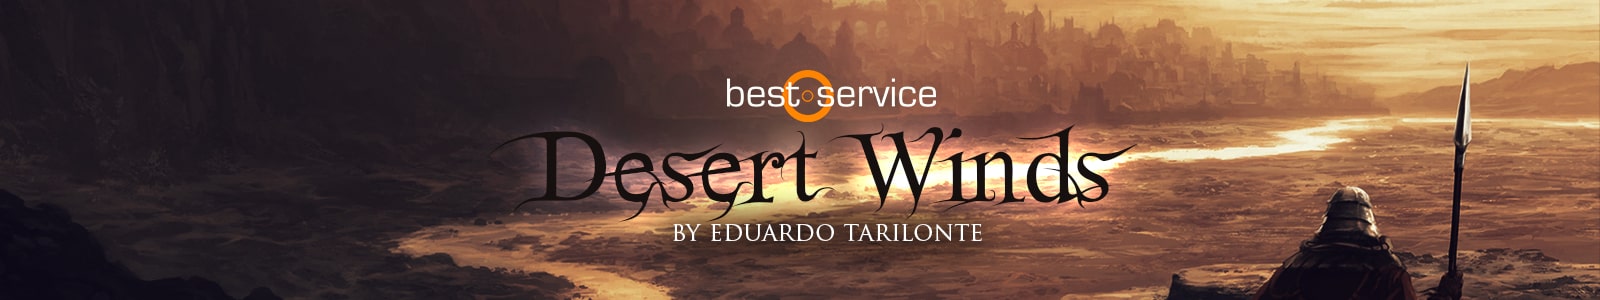 desert winds by eduardo tarilonte